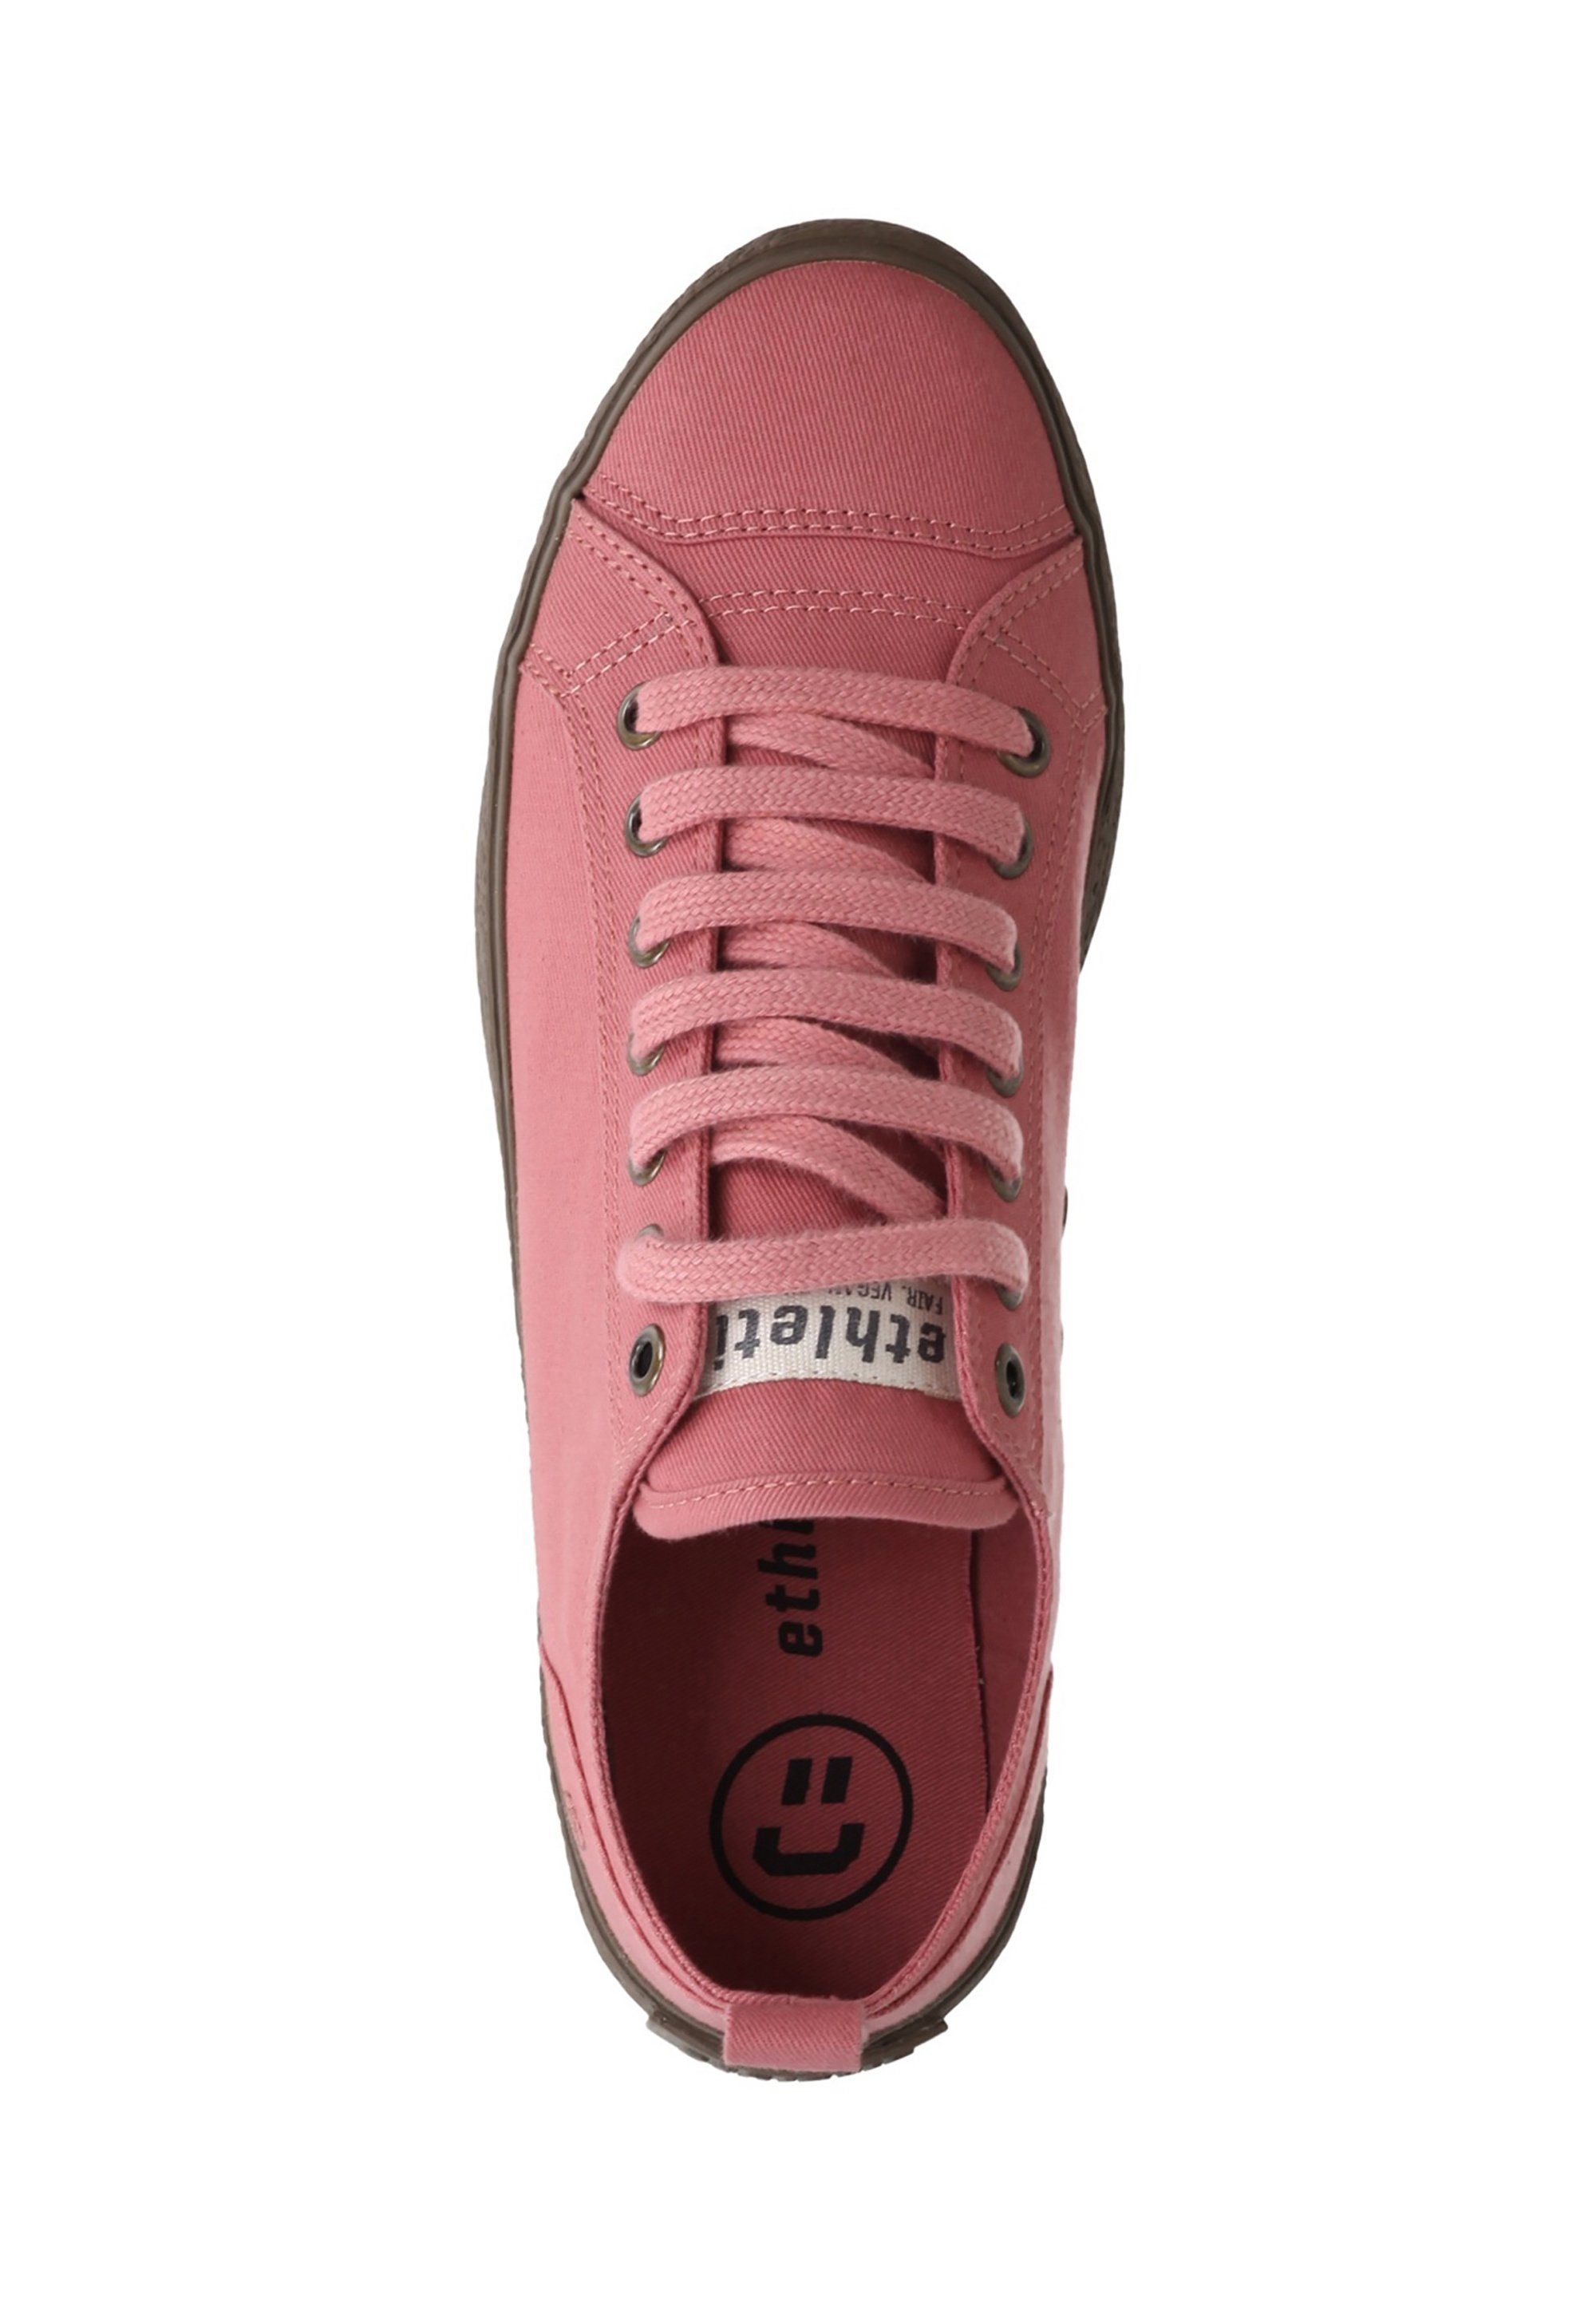 ETHLETIC rose dust Goto Sneaker Fairtrade Produkt Lo